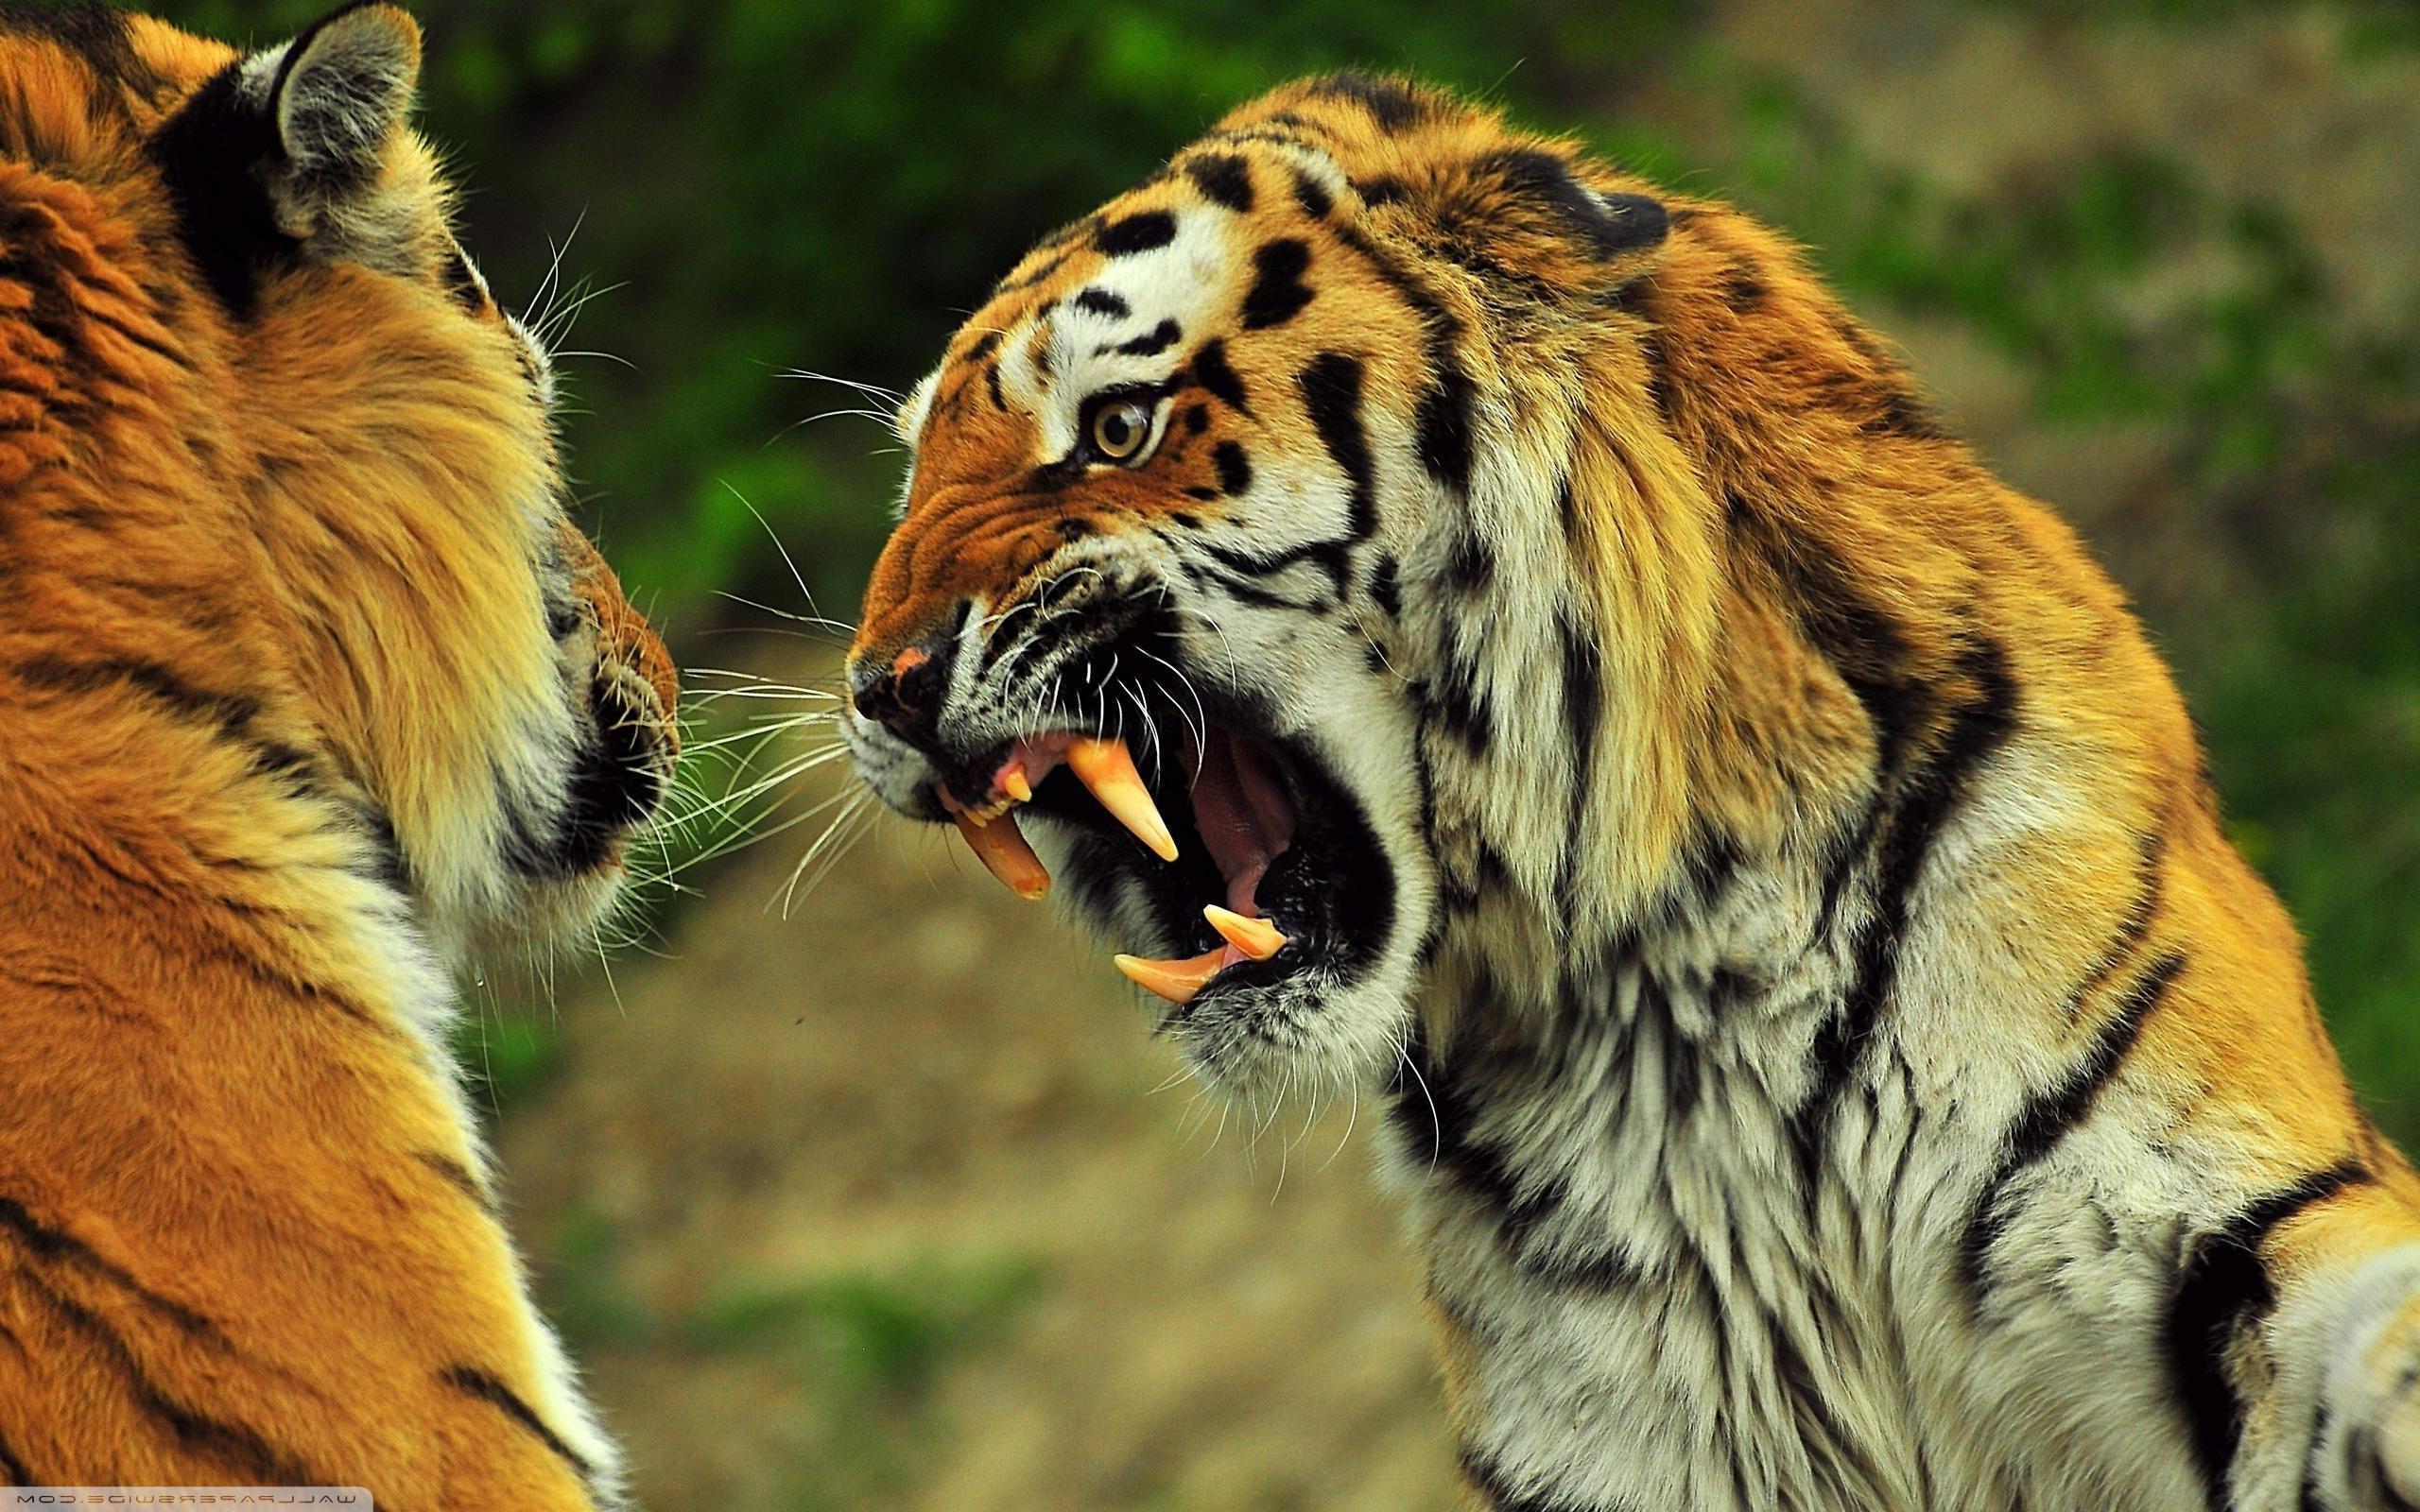 Tigers Roaring download high quality desktop wallpaper